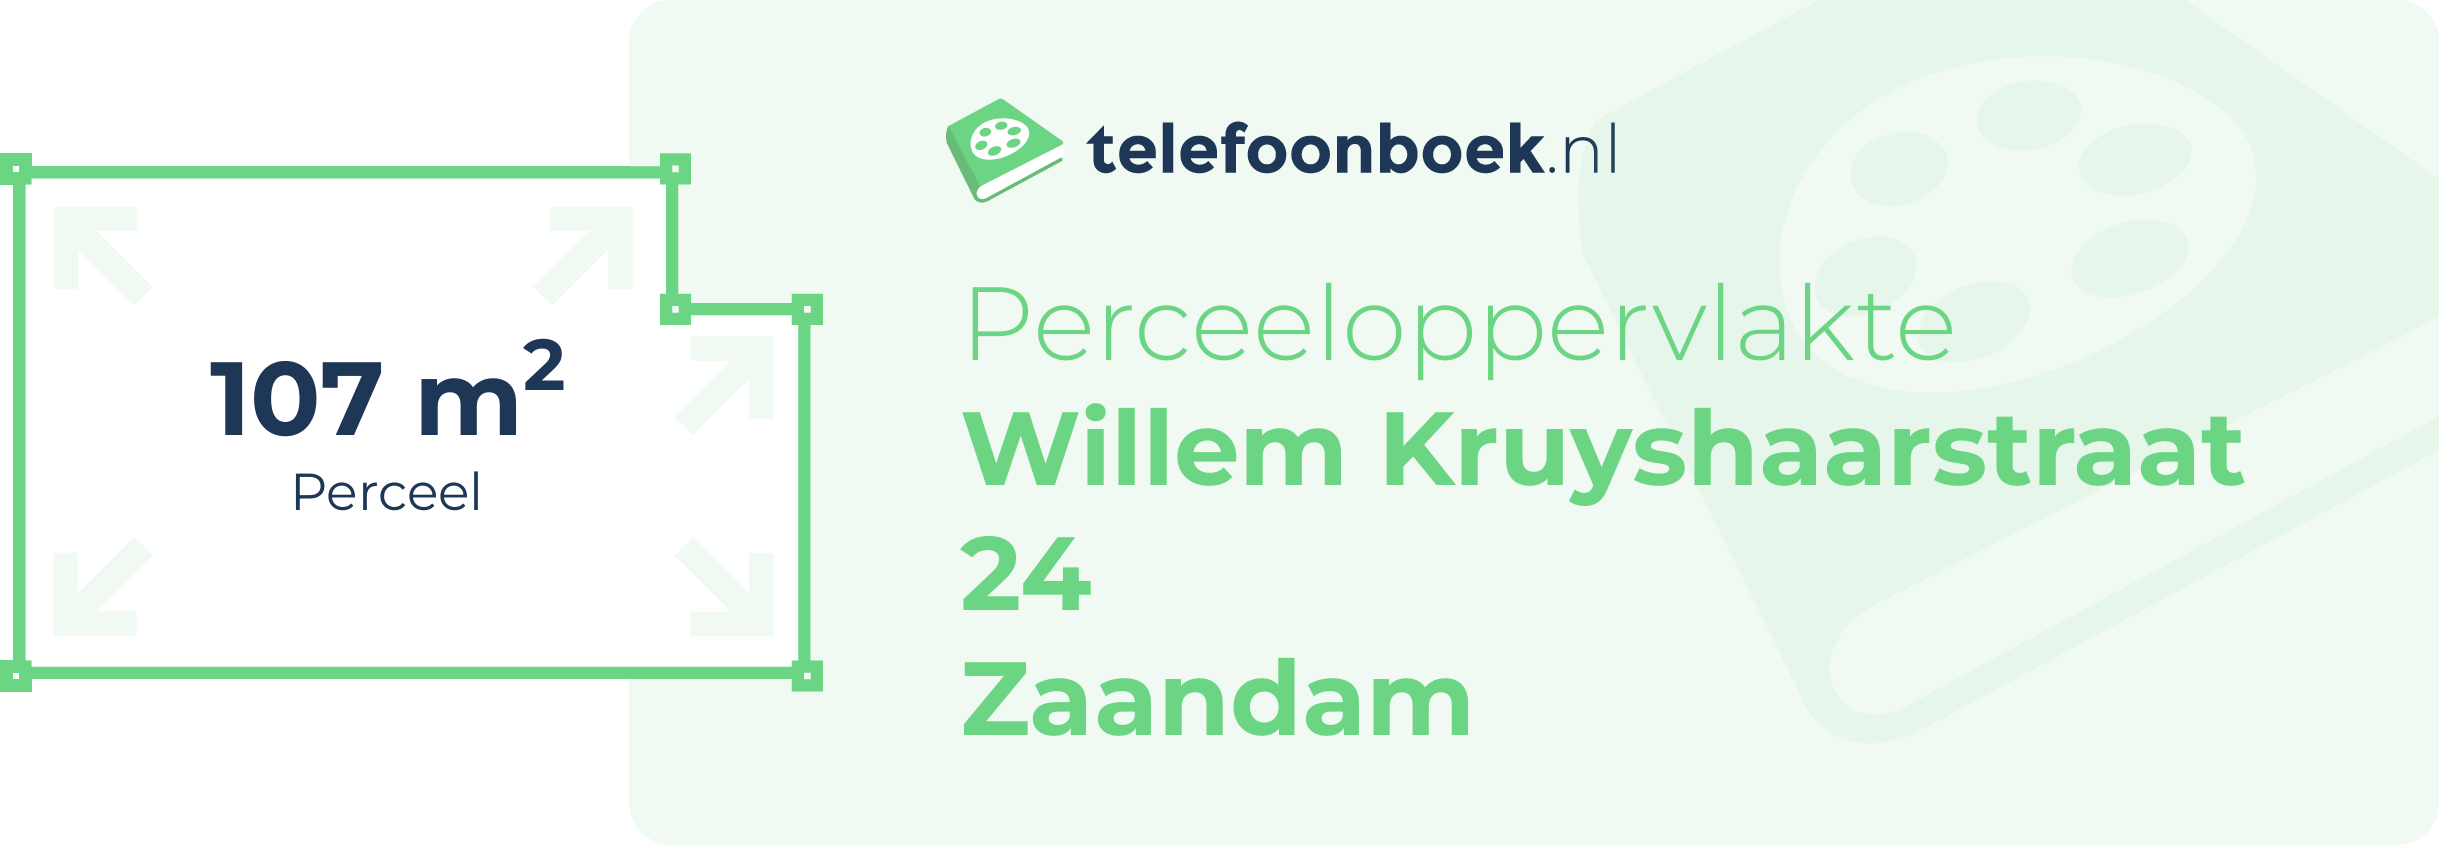 Perceeloppervlakte Willem Kruyshaarstraat 24 Zaandam